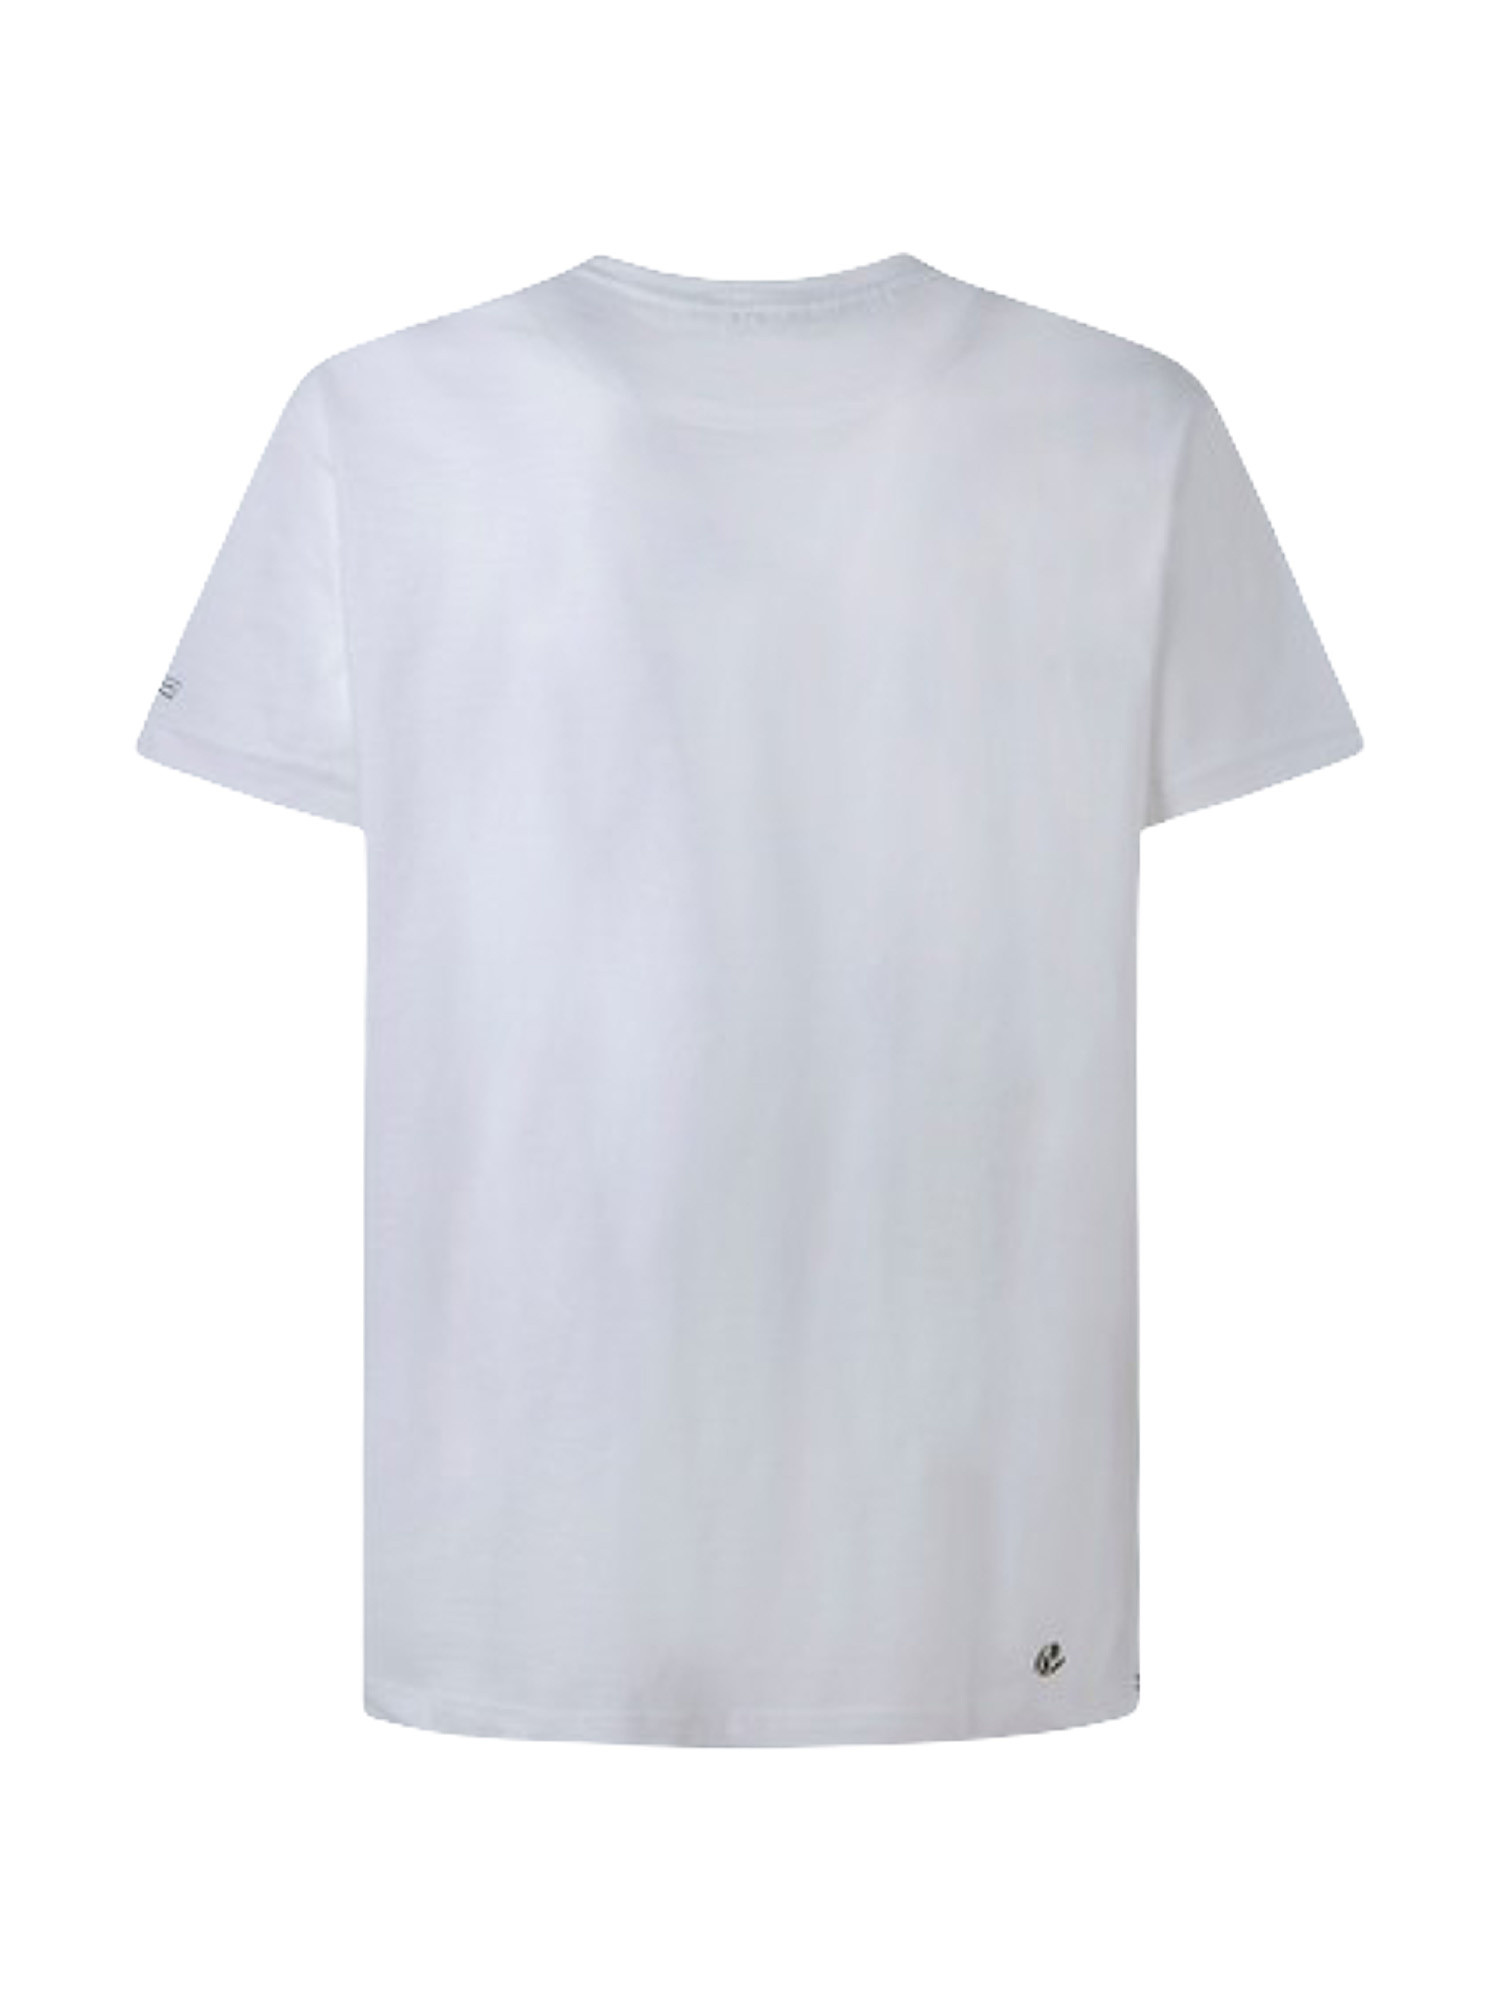 T-shirt con stampa a quadri aldarian, Bianco, large image number 1